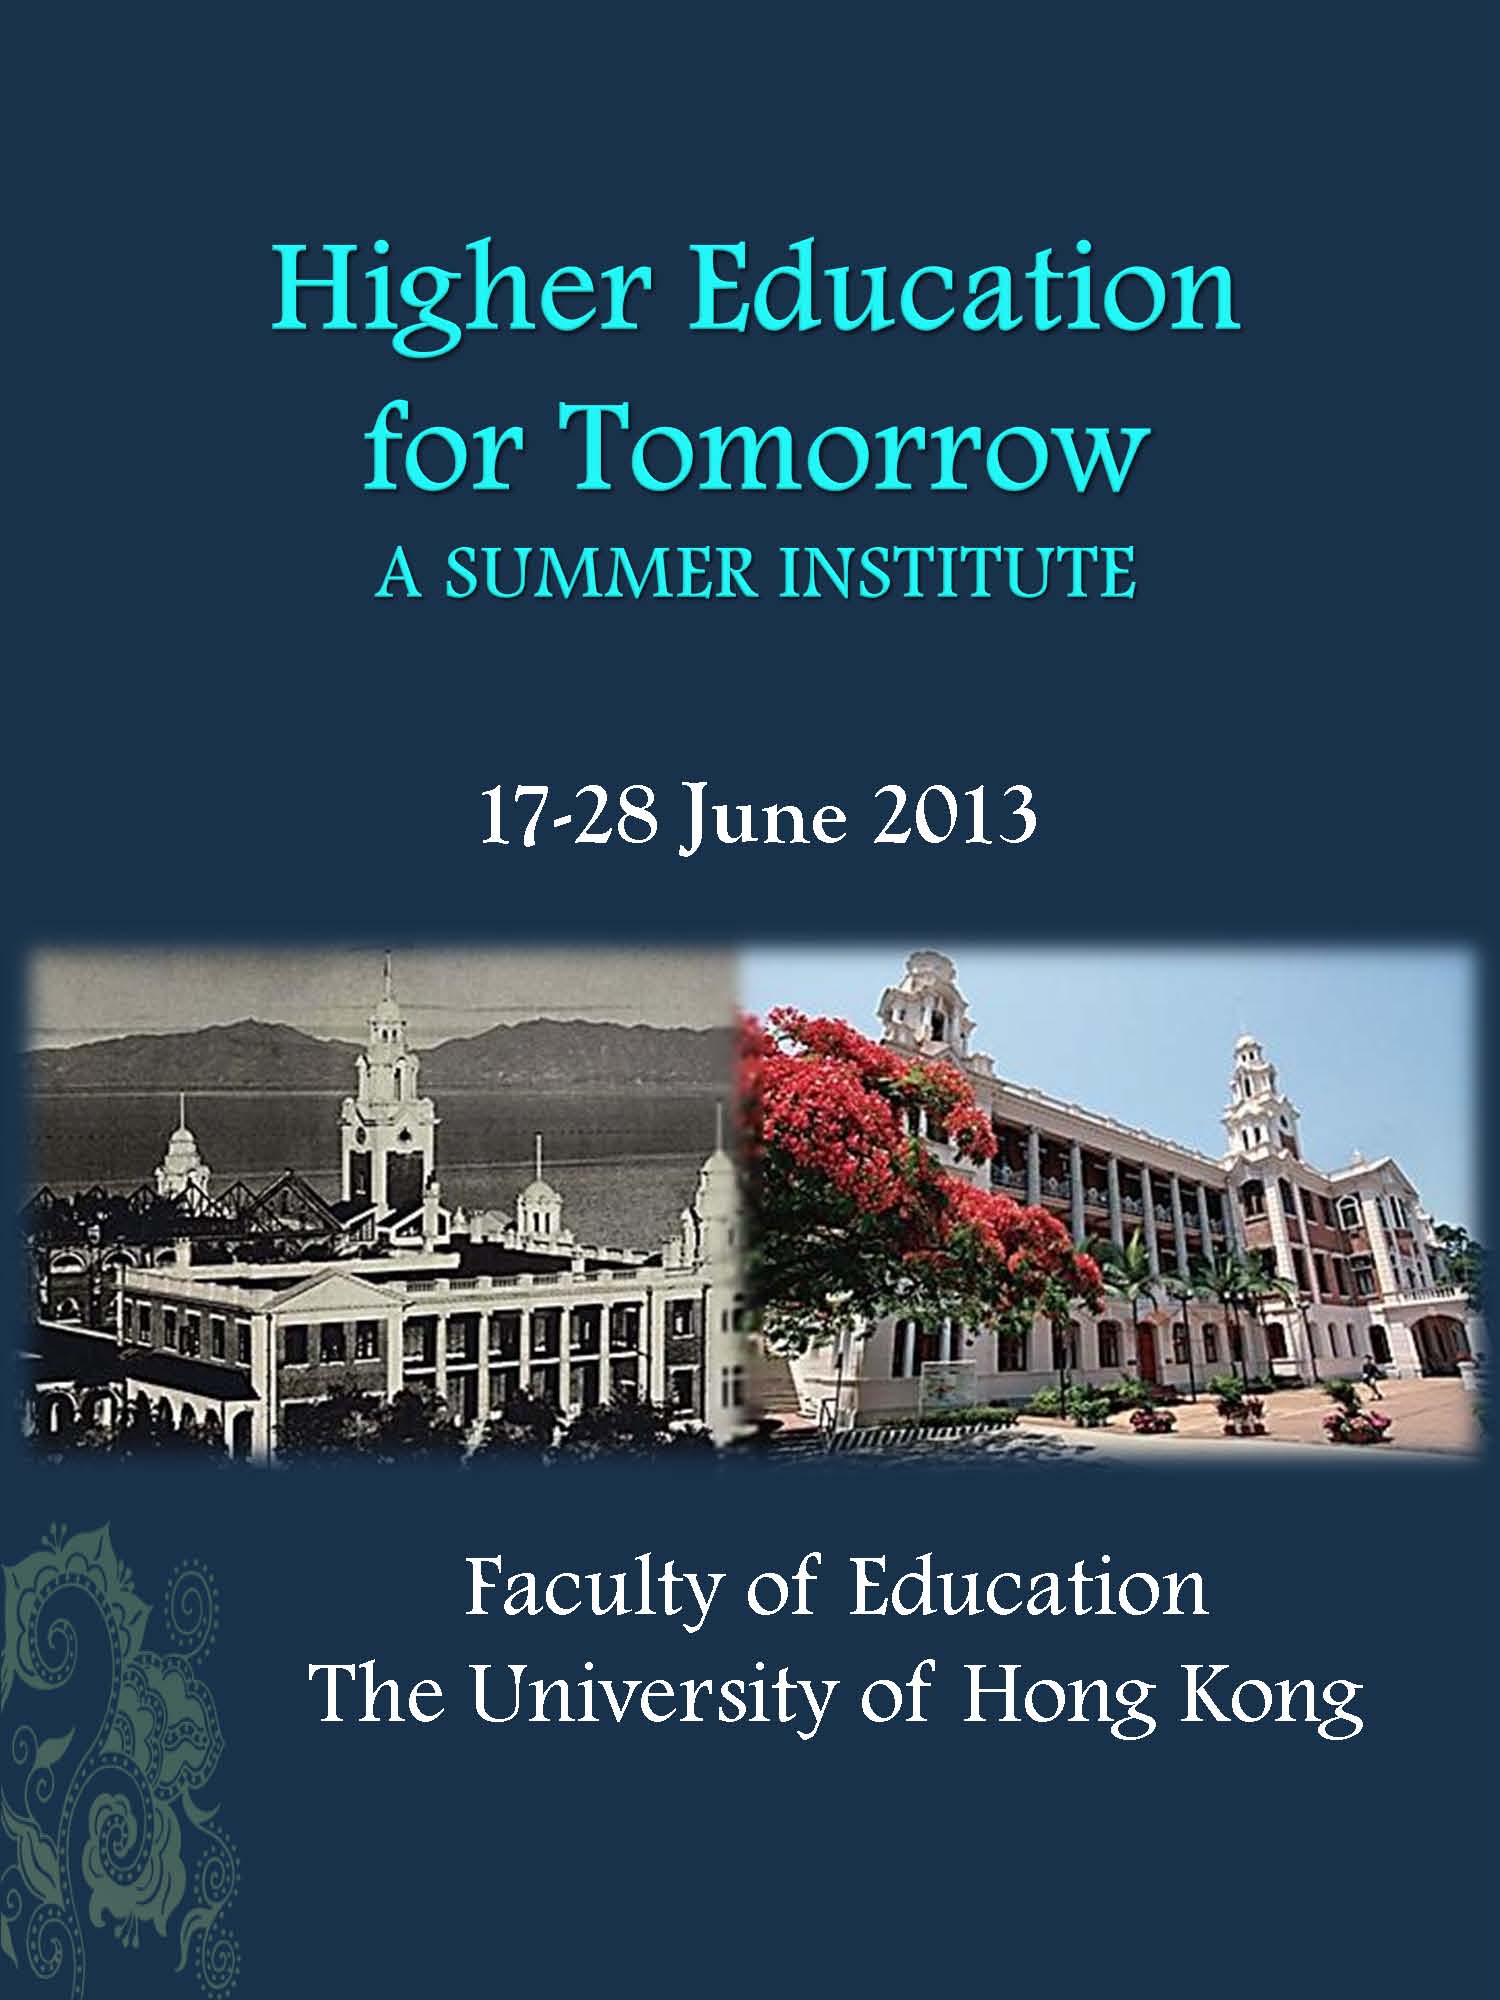 HKU Summer Institute for Higher Education 